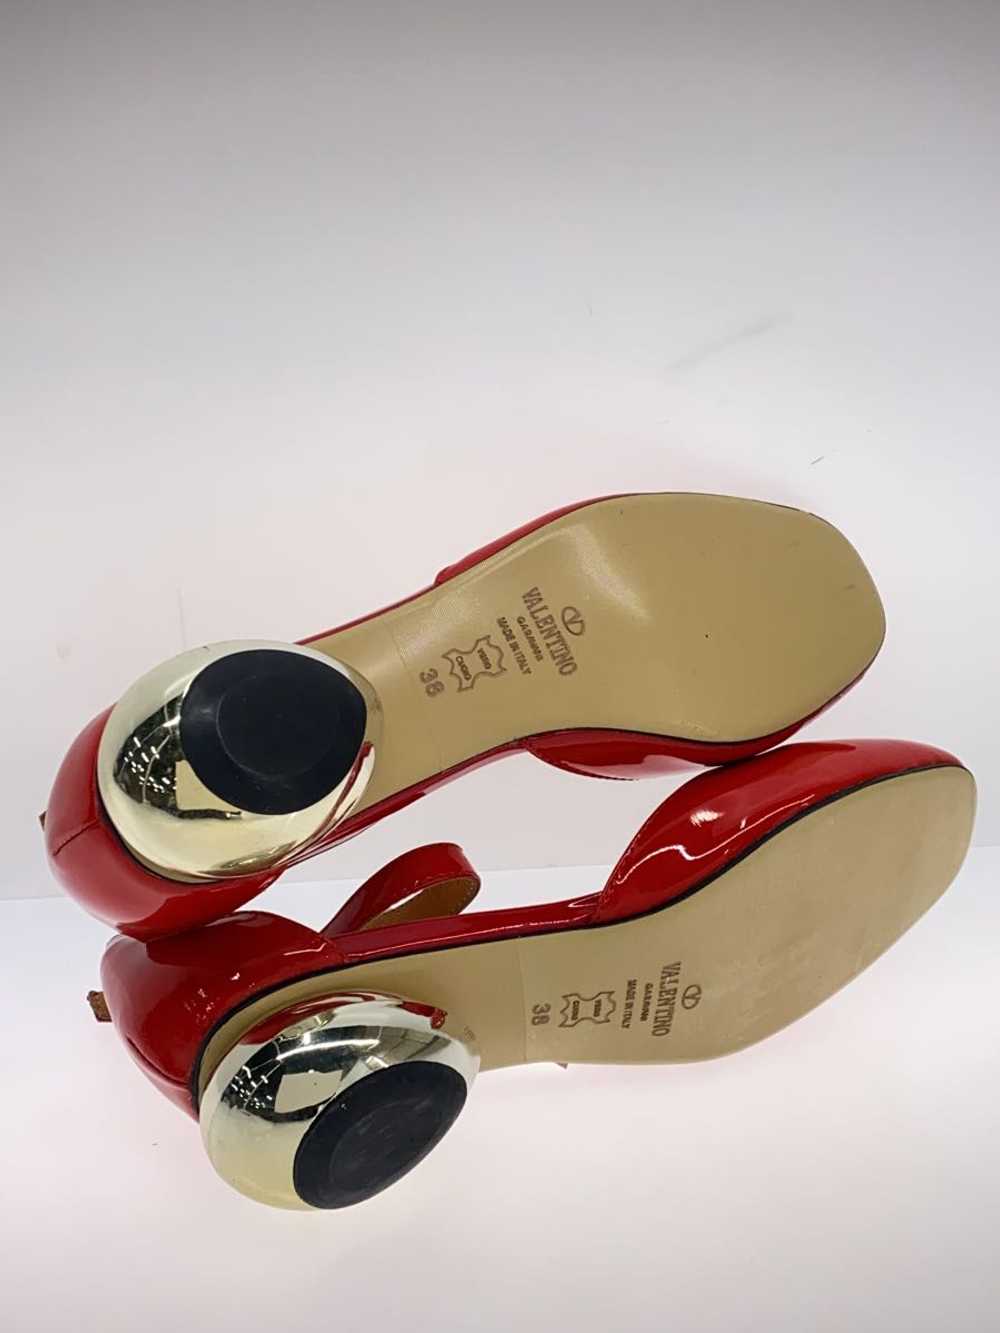 Valentino Garavani Pumps/38/Red/Enamel Shoes BiI84 - image 4